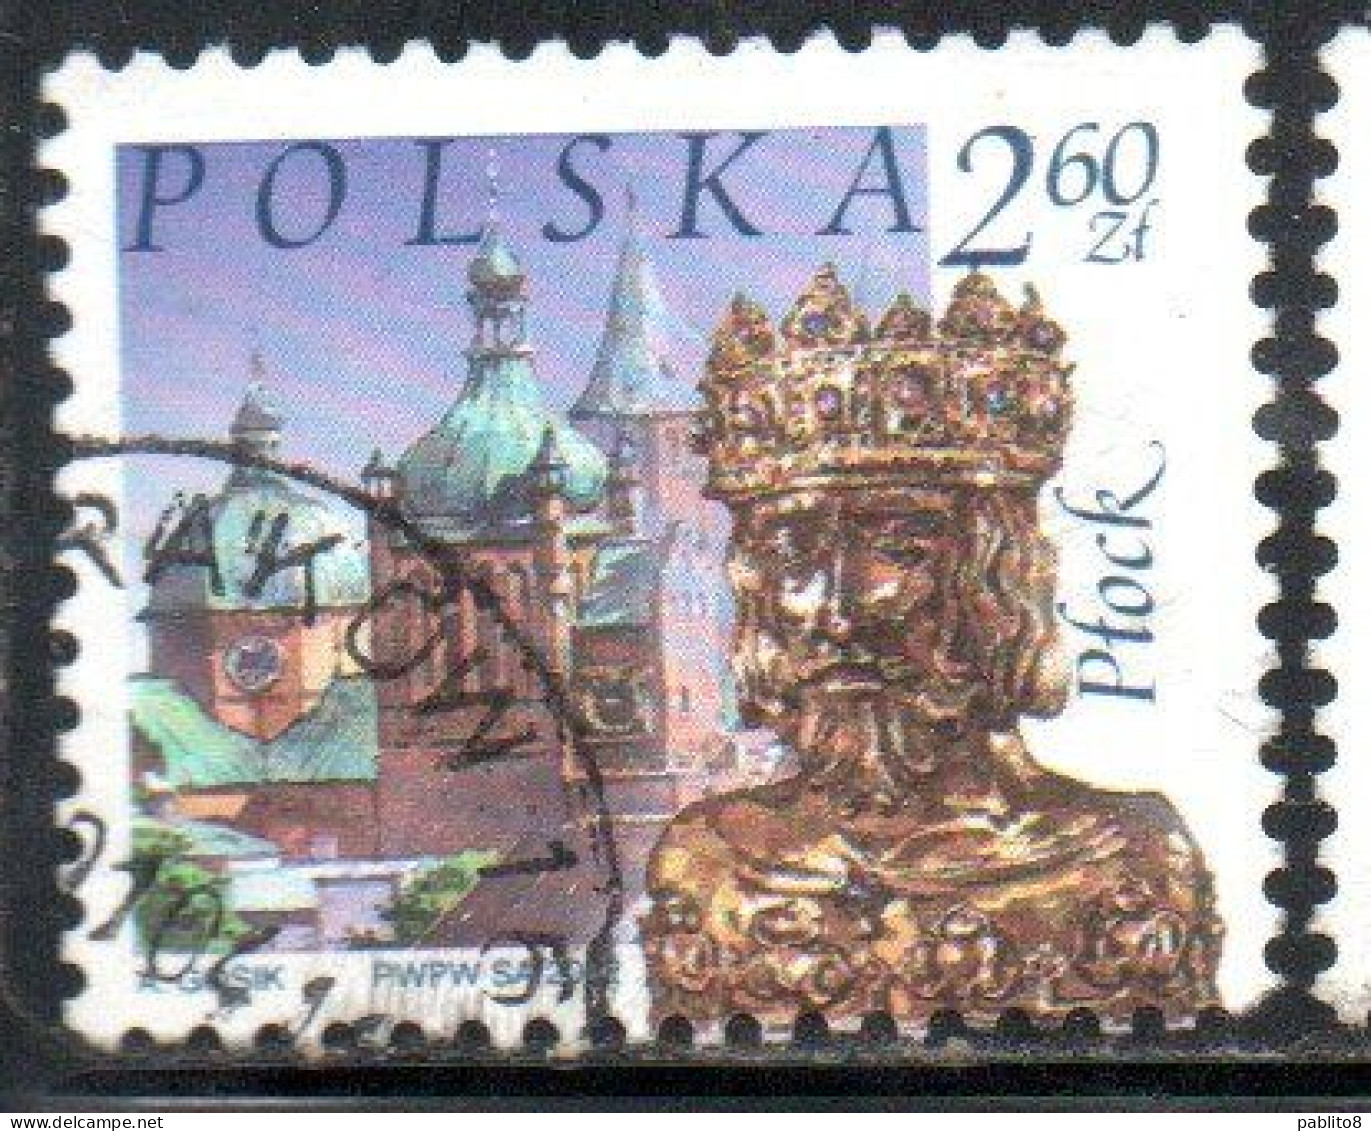 POLONIA POLAND POLSKA 2002 CITY CASTLE RELIQUARY OF ST. SIGISMUND PLOCK 2.60z USATO USED OBLITERE' - Gebraucht